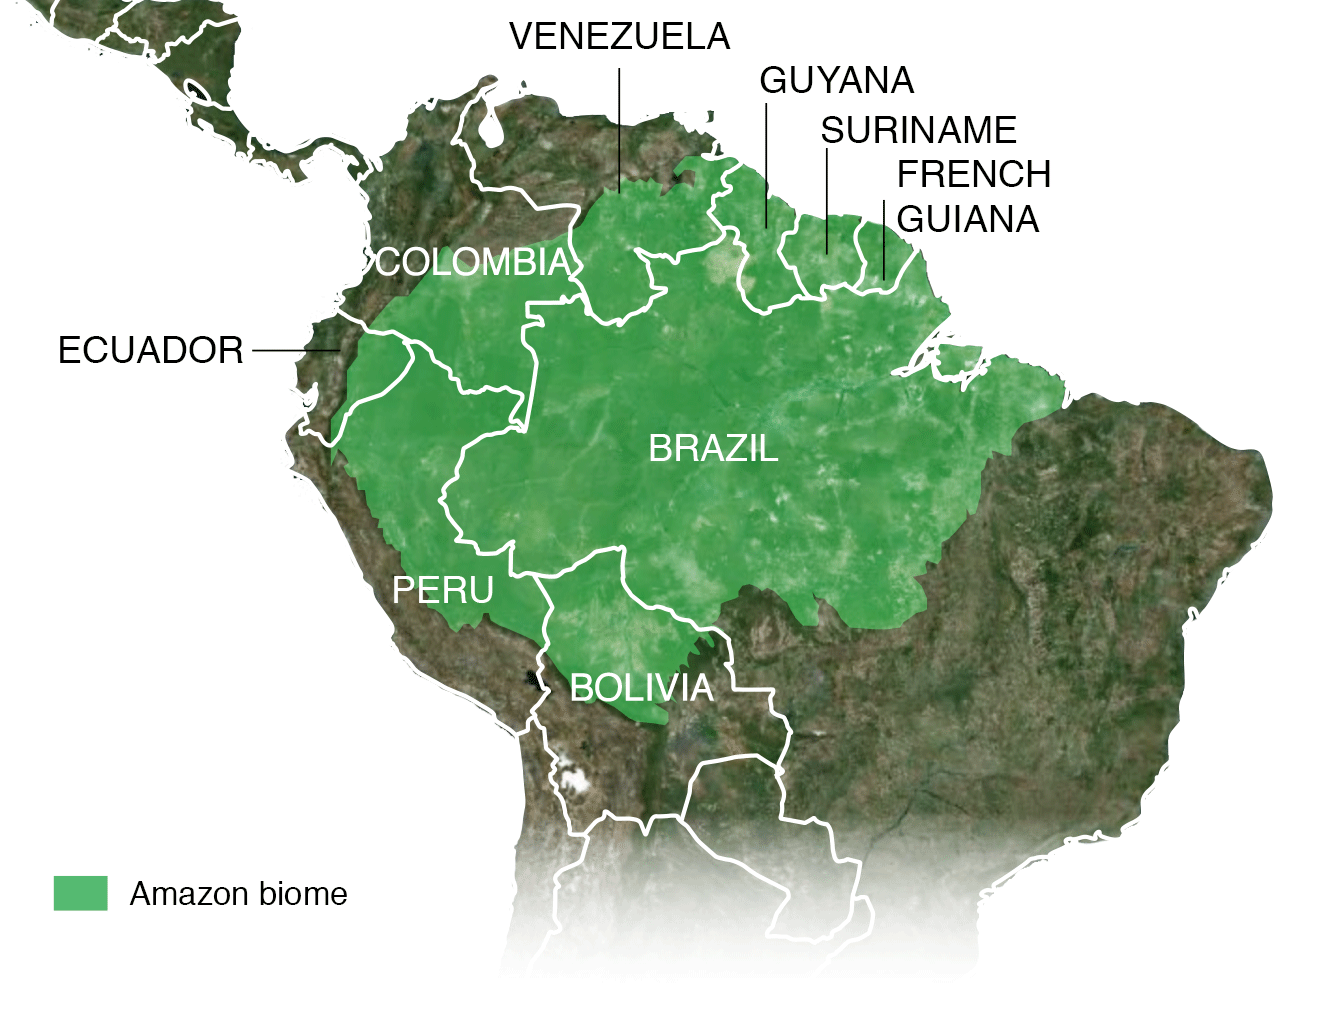 Map of Amazon biome including Peru, Bolivia, Ecuador, Colombia, Guyana, Suriname, French Guiana and Brazil and Venezuela